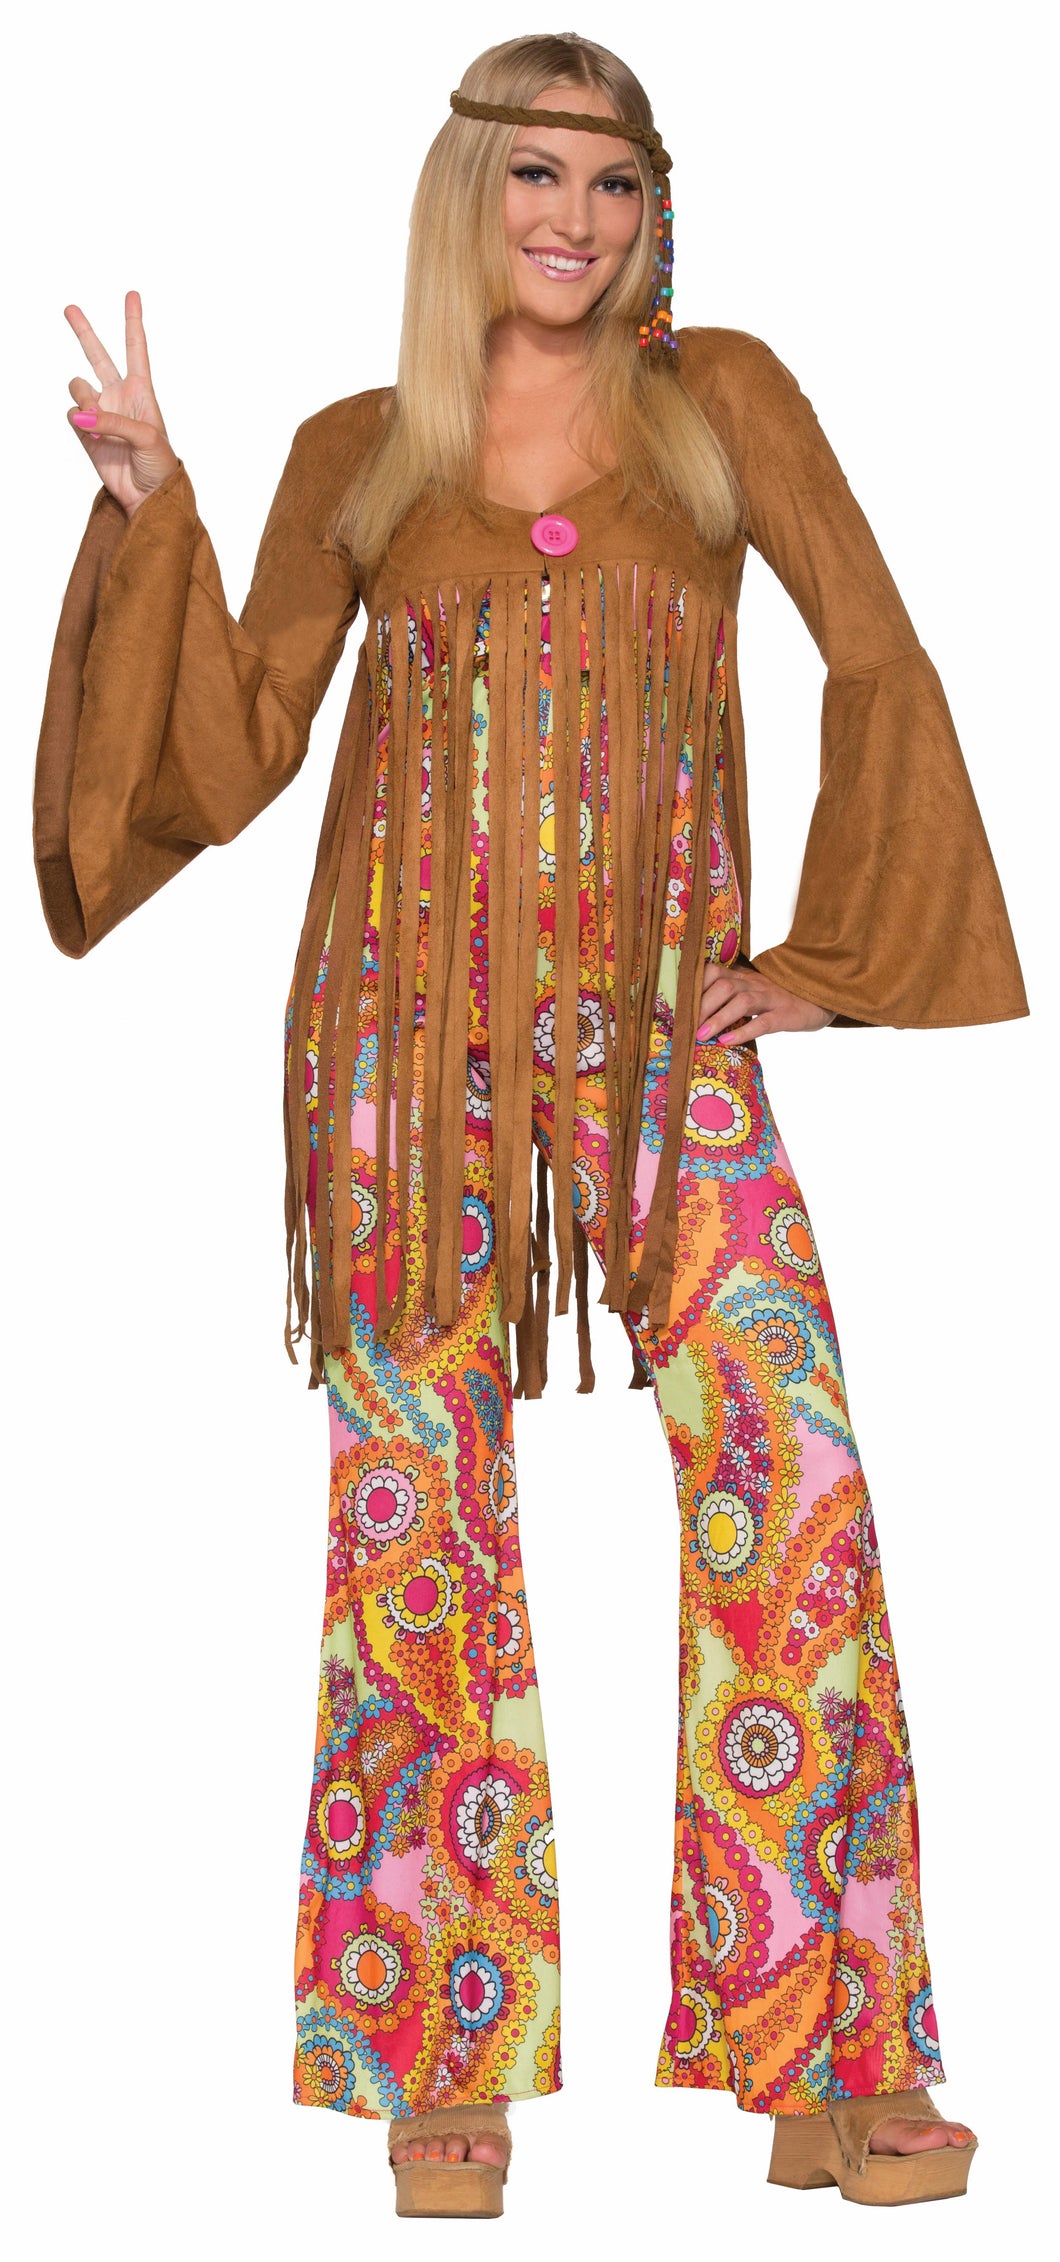 Hippie Groovy Sweetie - 70's costume